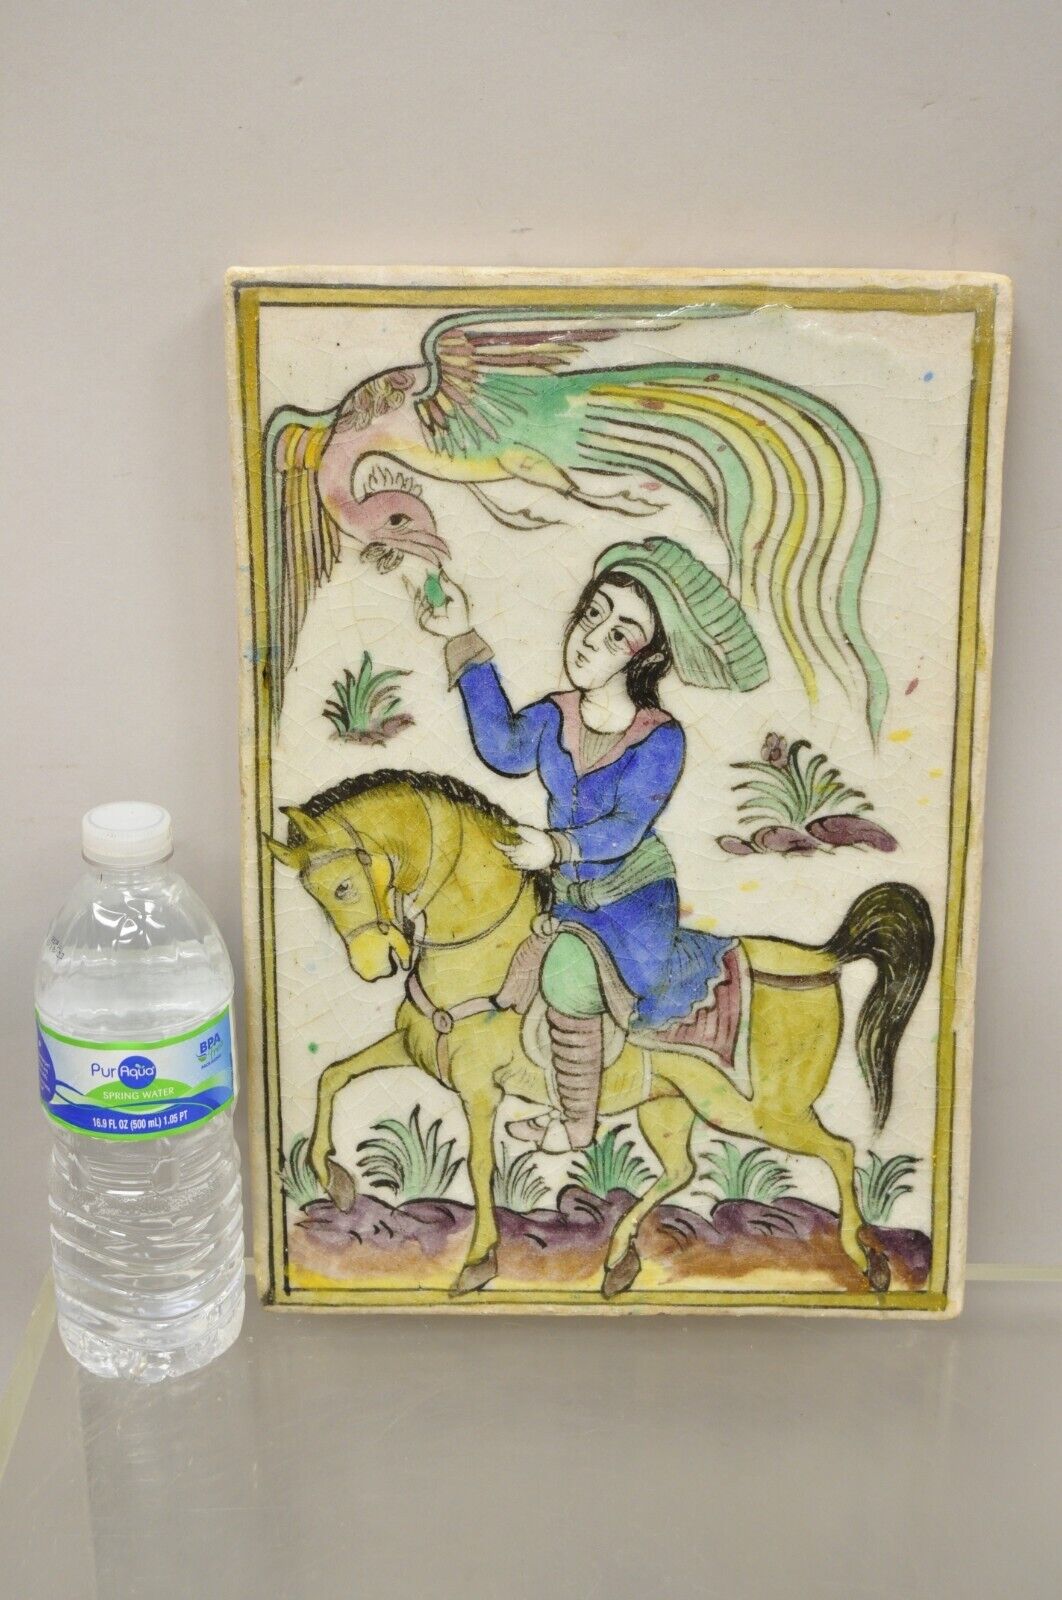 Antique Persian Iznik Qajar Style Ceramic Pottery Tile Phoenix Horse Rider C1